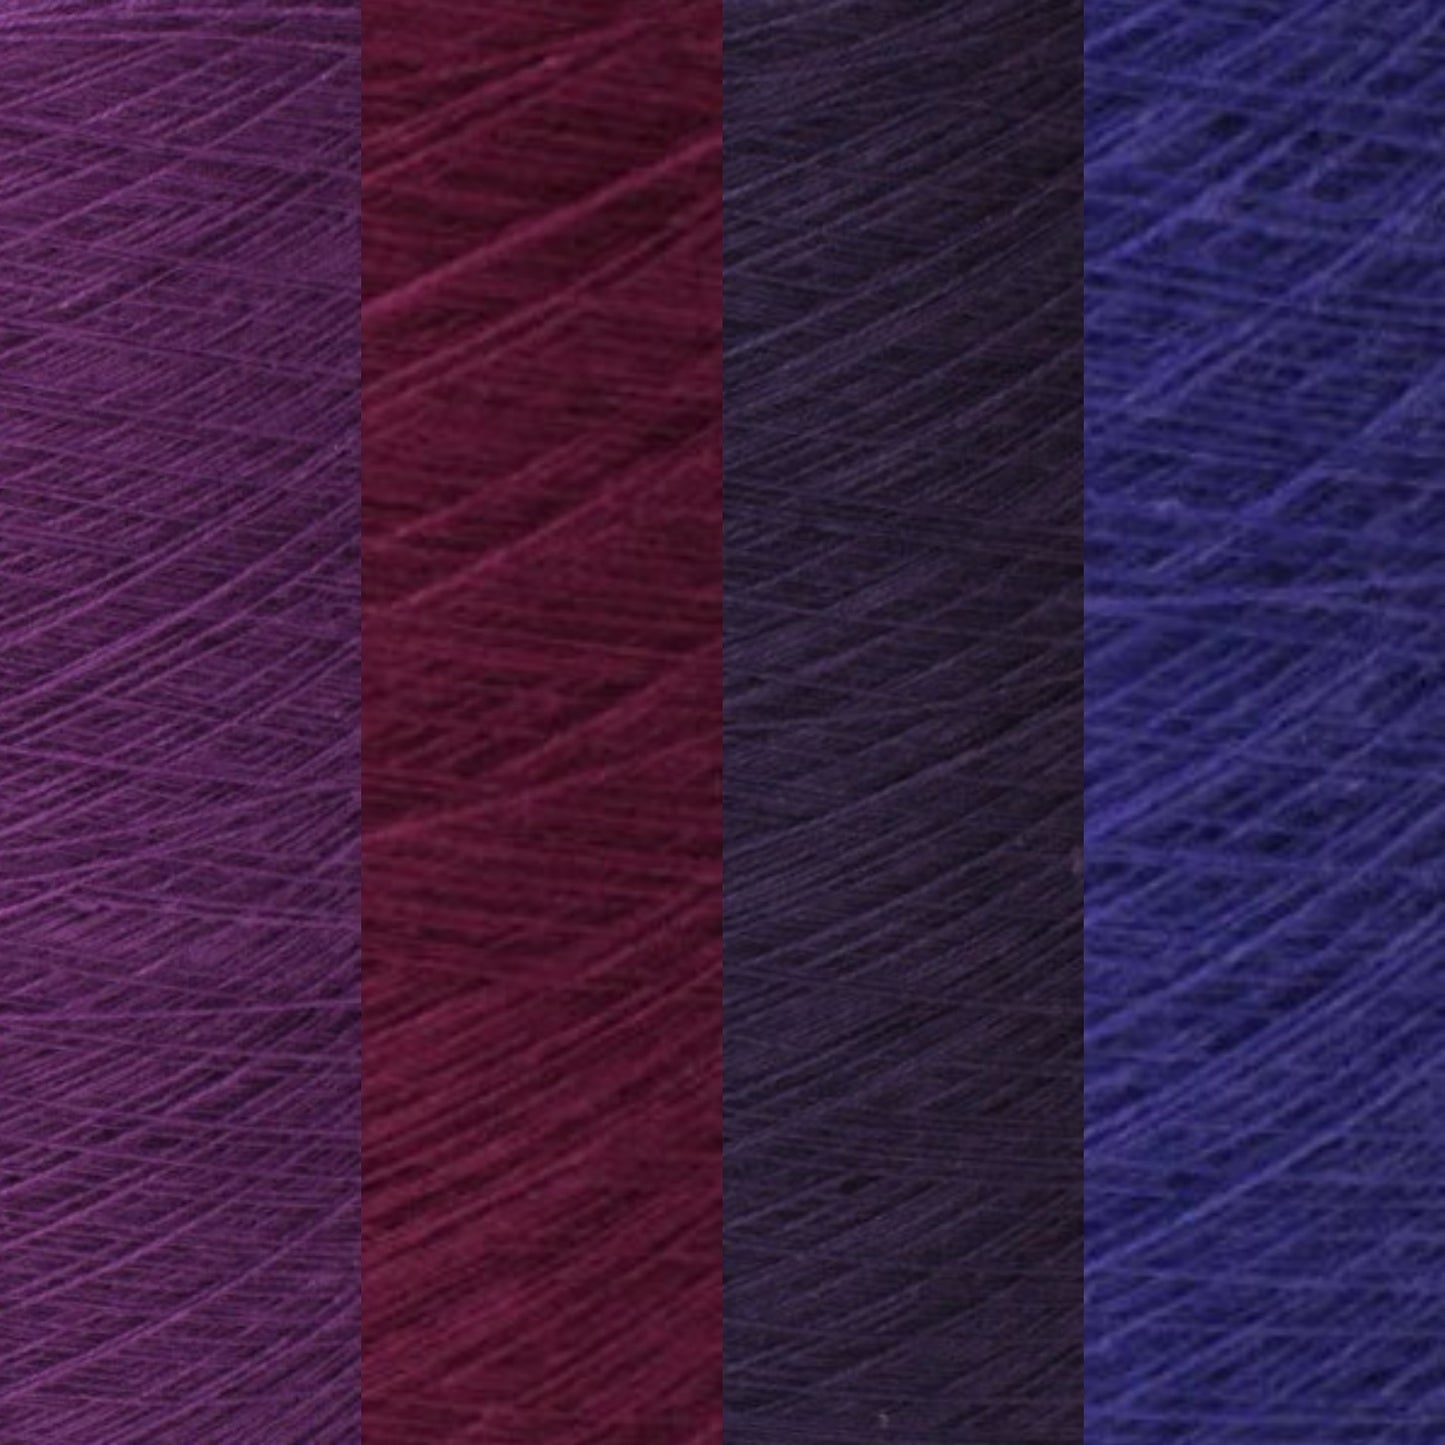 Gradient ombre yarn cake colour combination C322